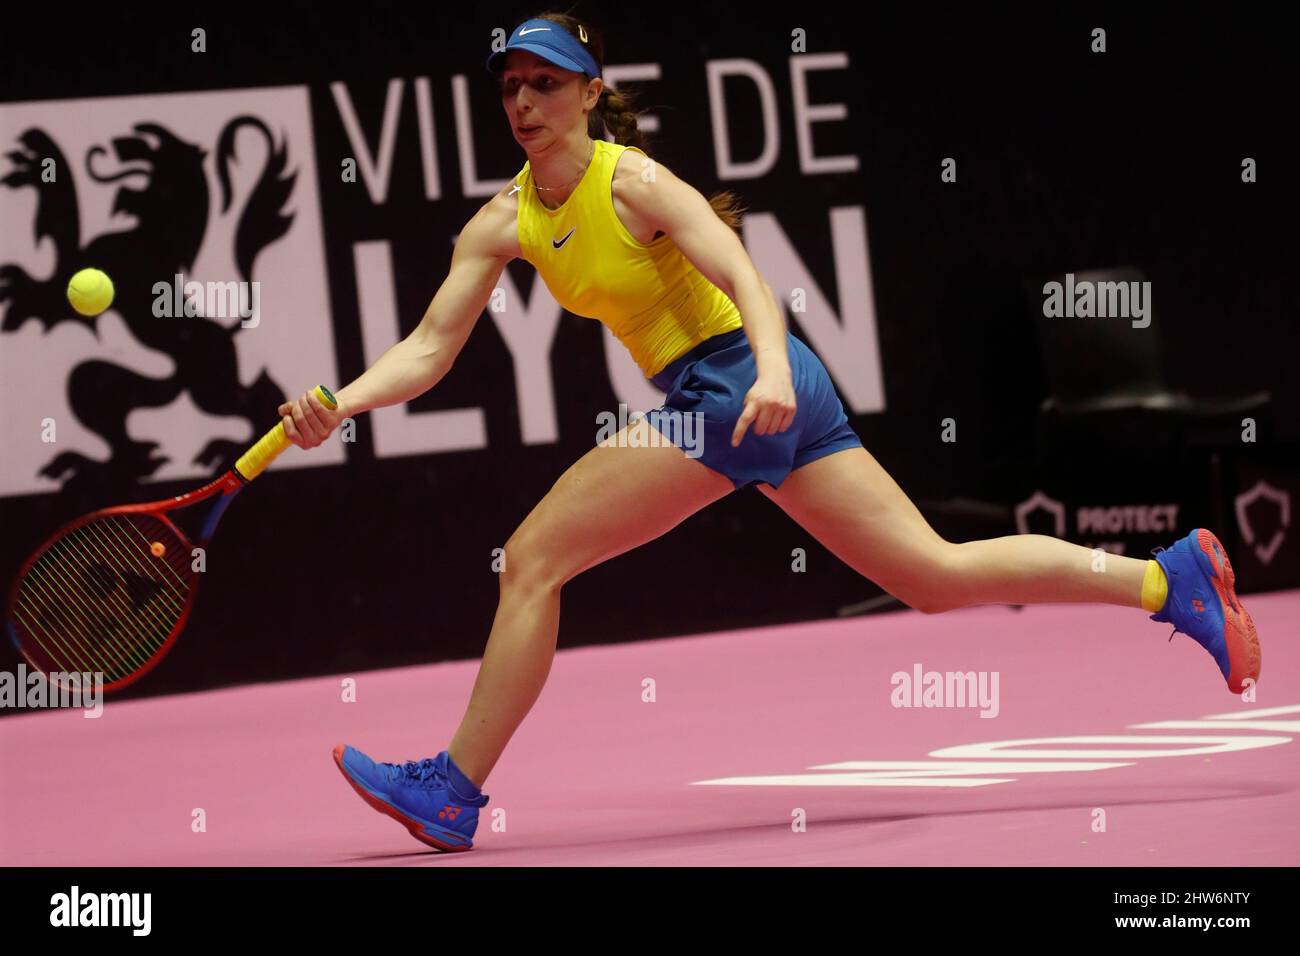 Tamara KORPATSCH (GER) during the Open 6ème Sens, Métropole de Lyon 2022,  WTA 250 tennis tournament